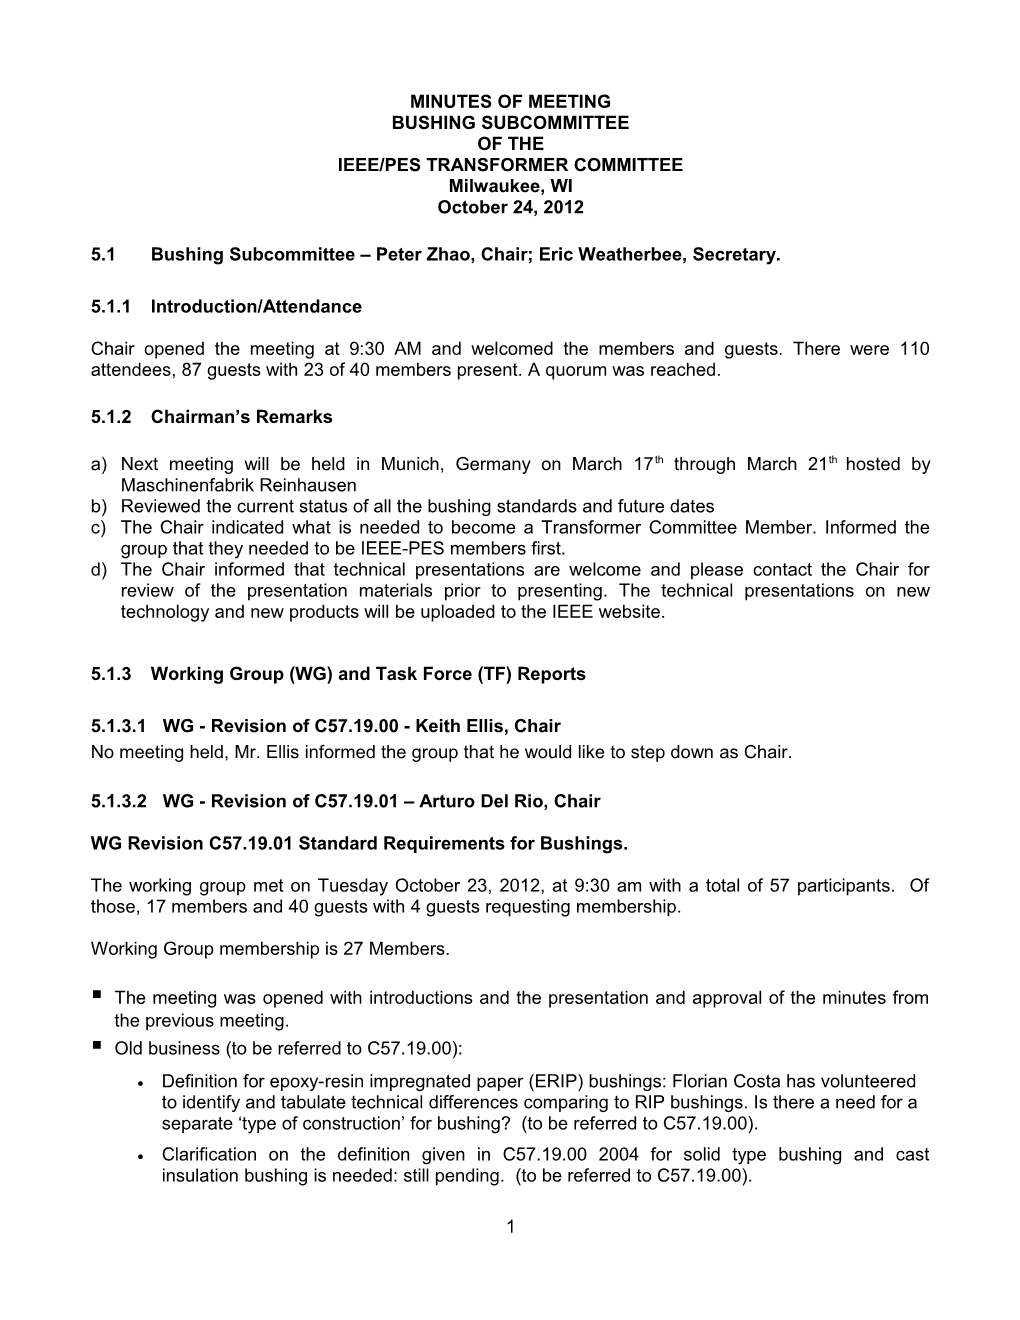 Fall 2012 Bushing SC Meeting Minutes